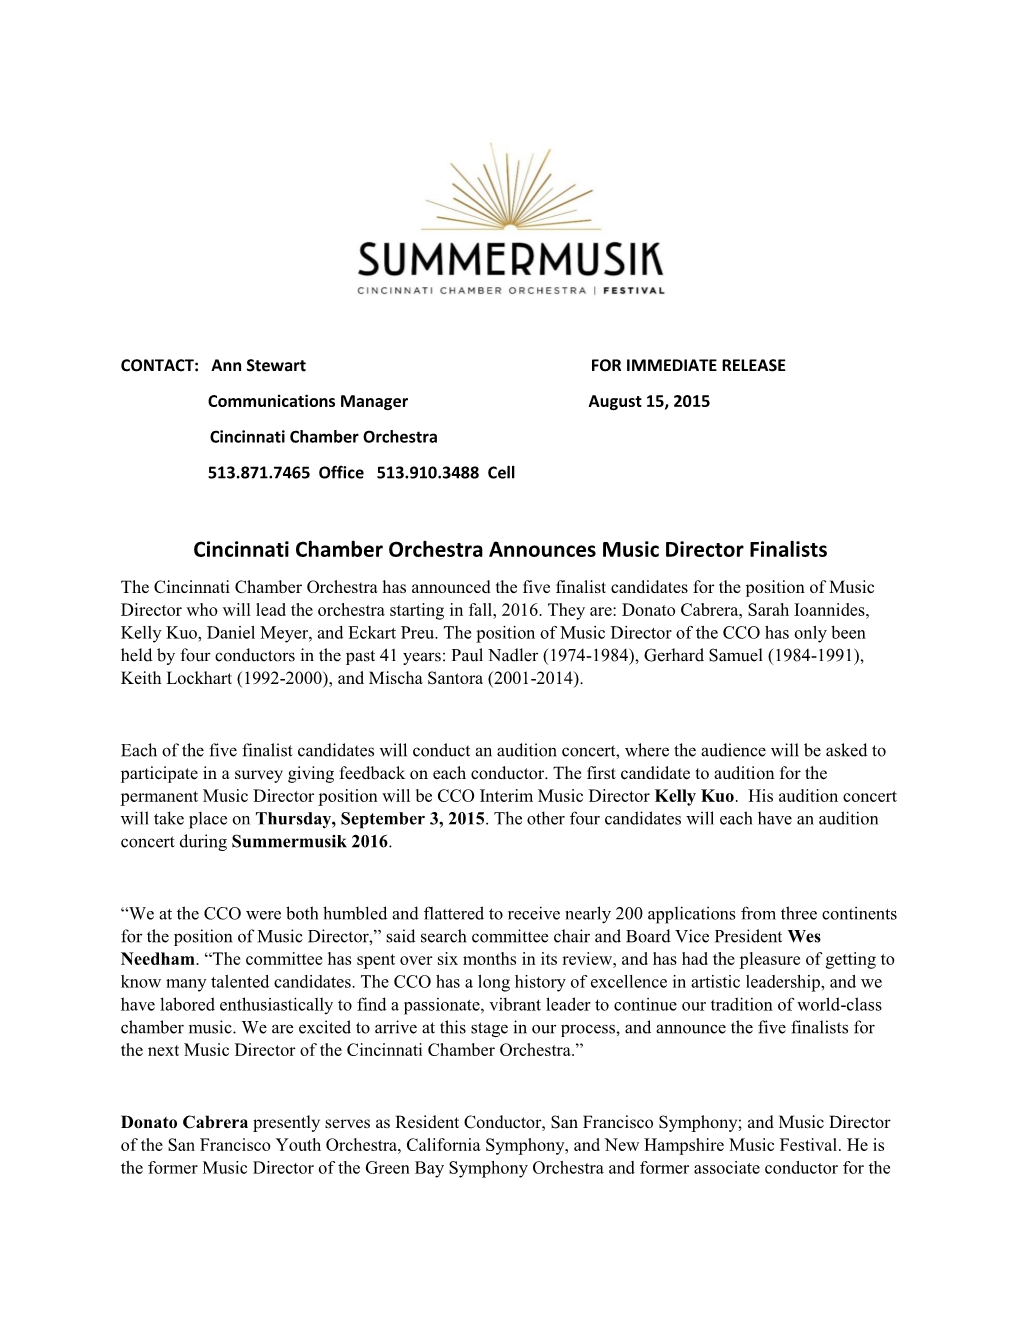 Cincinnati Chamber Orchestra Announces Music Director Finalists